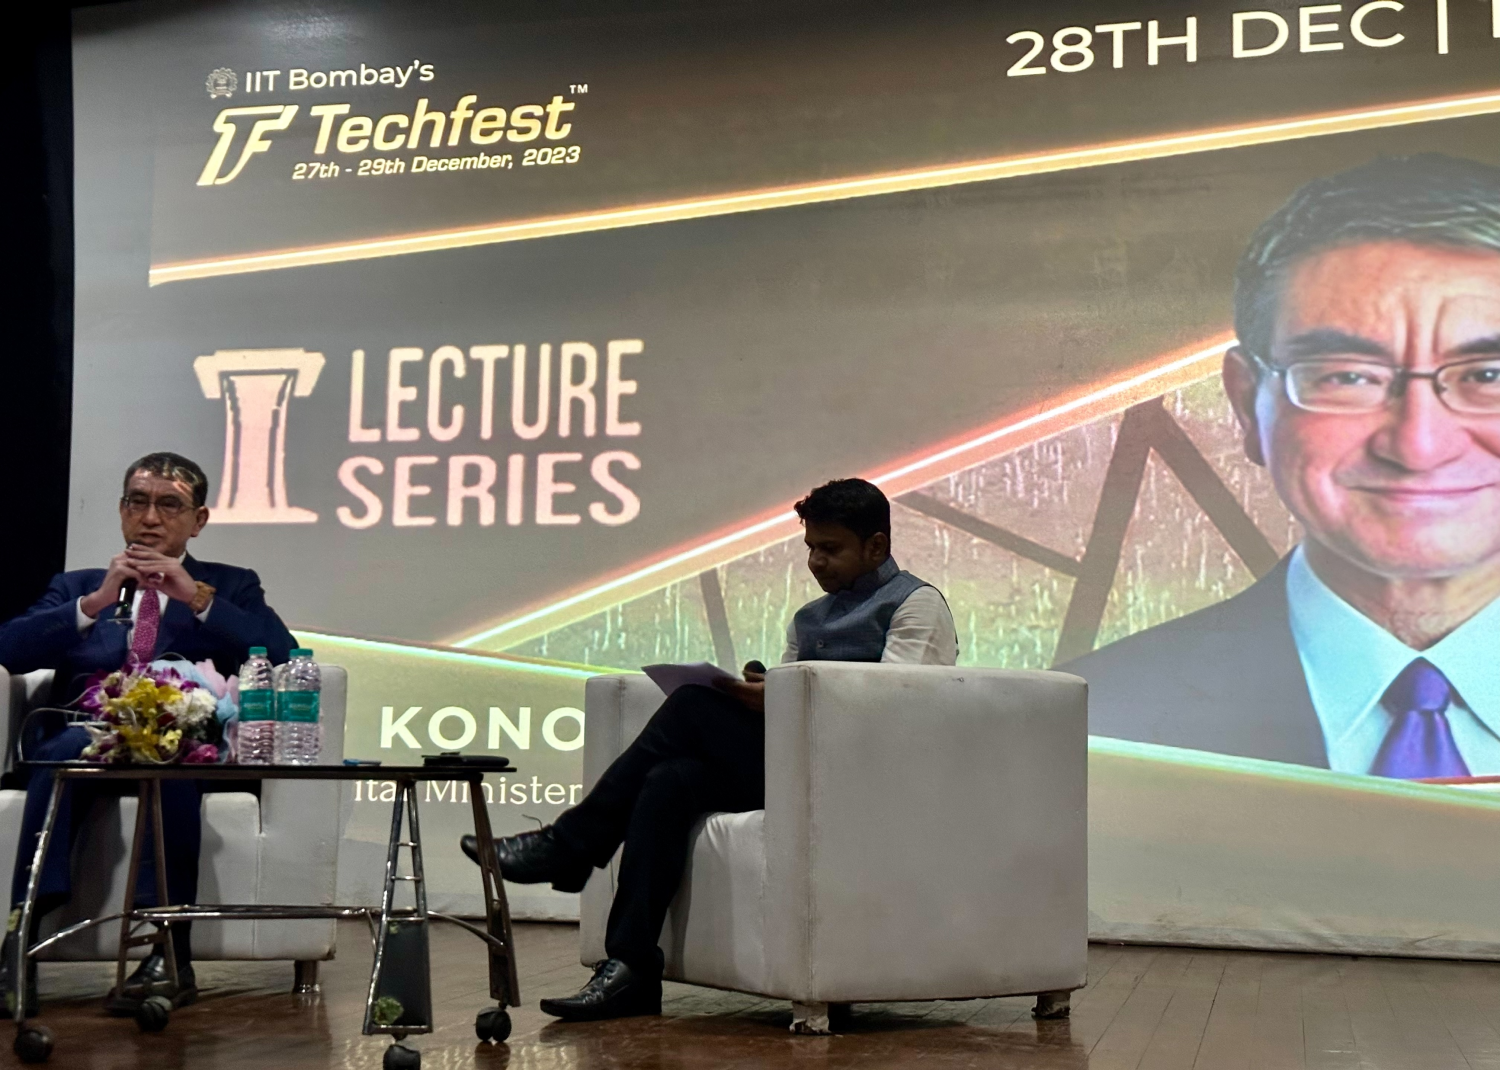 Minister Kono speaking at IIT Bombay Techfest 2023.